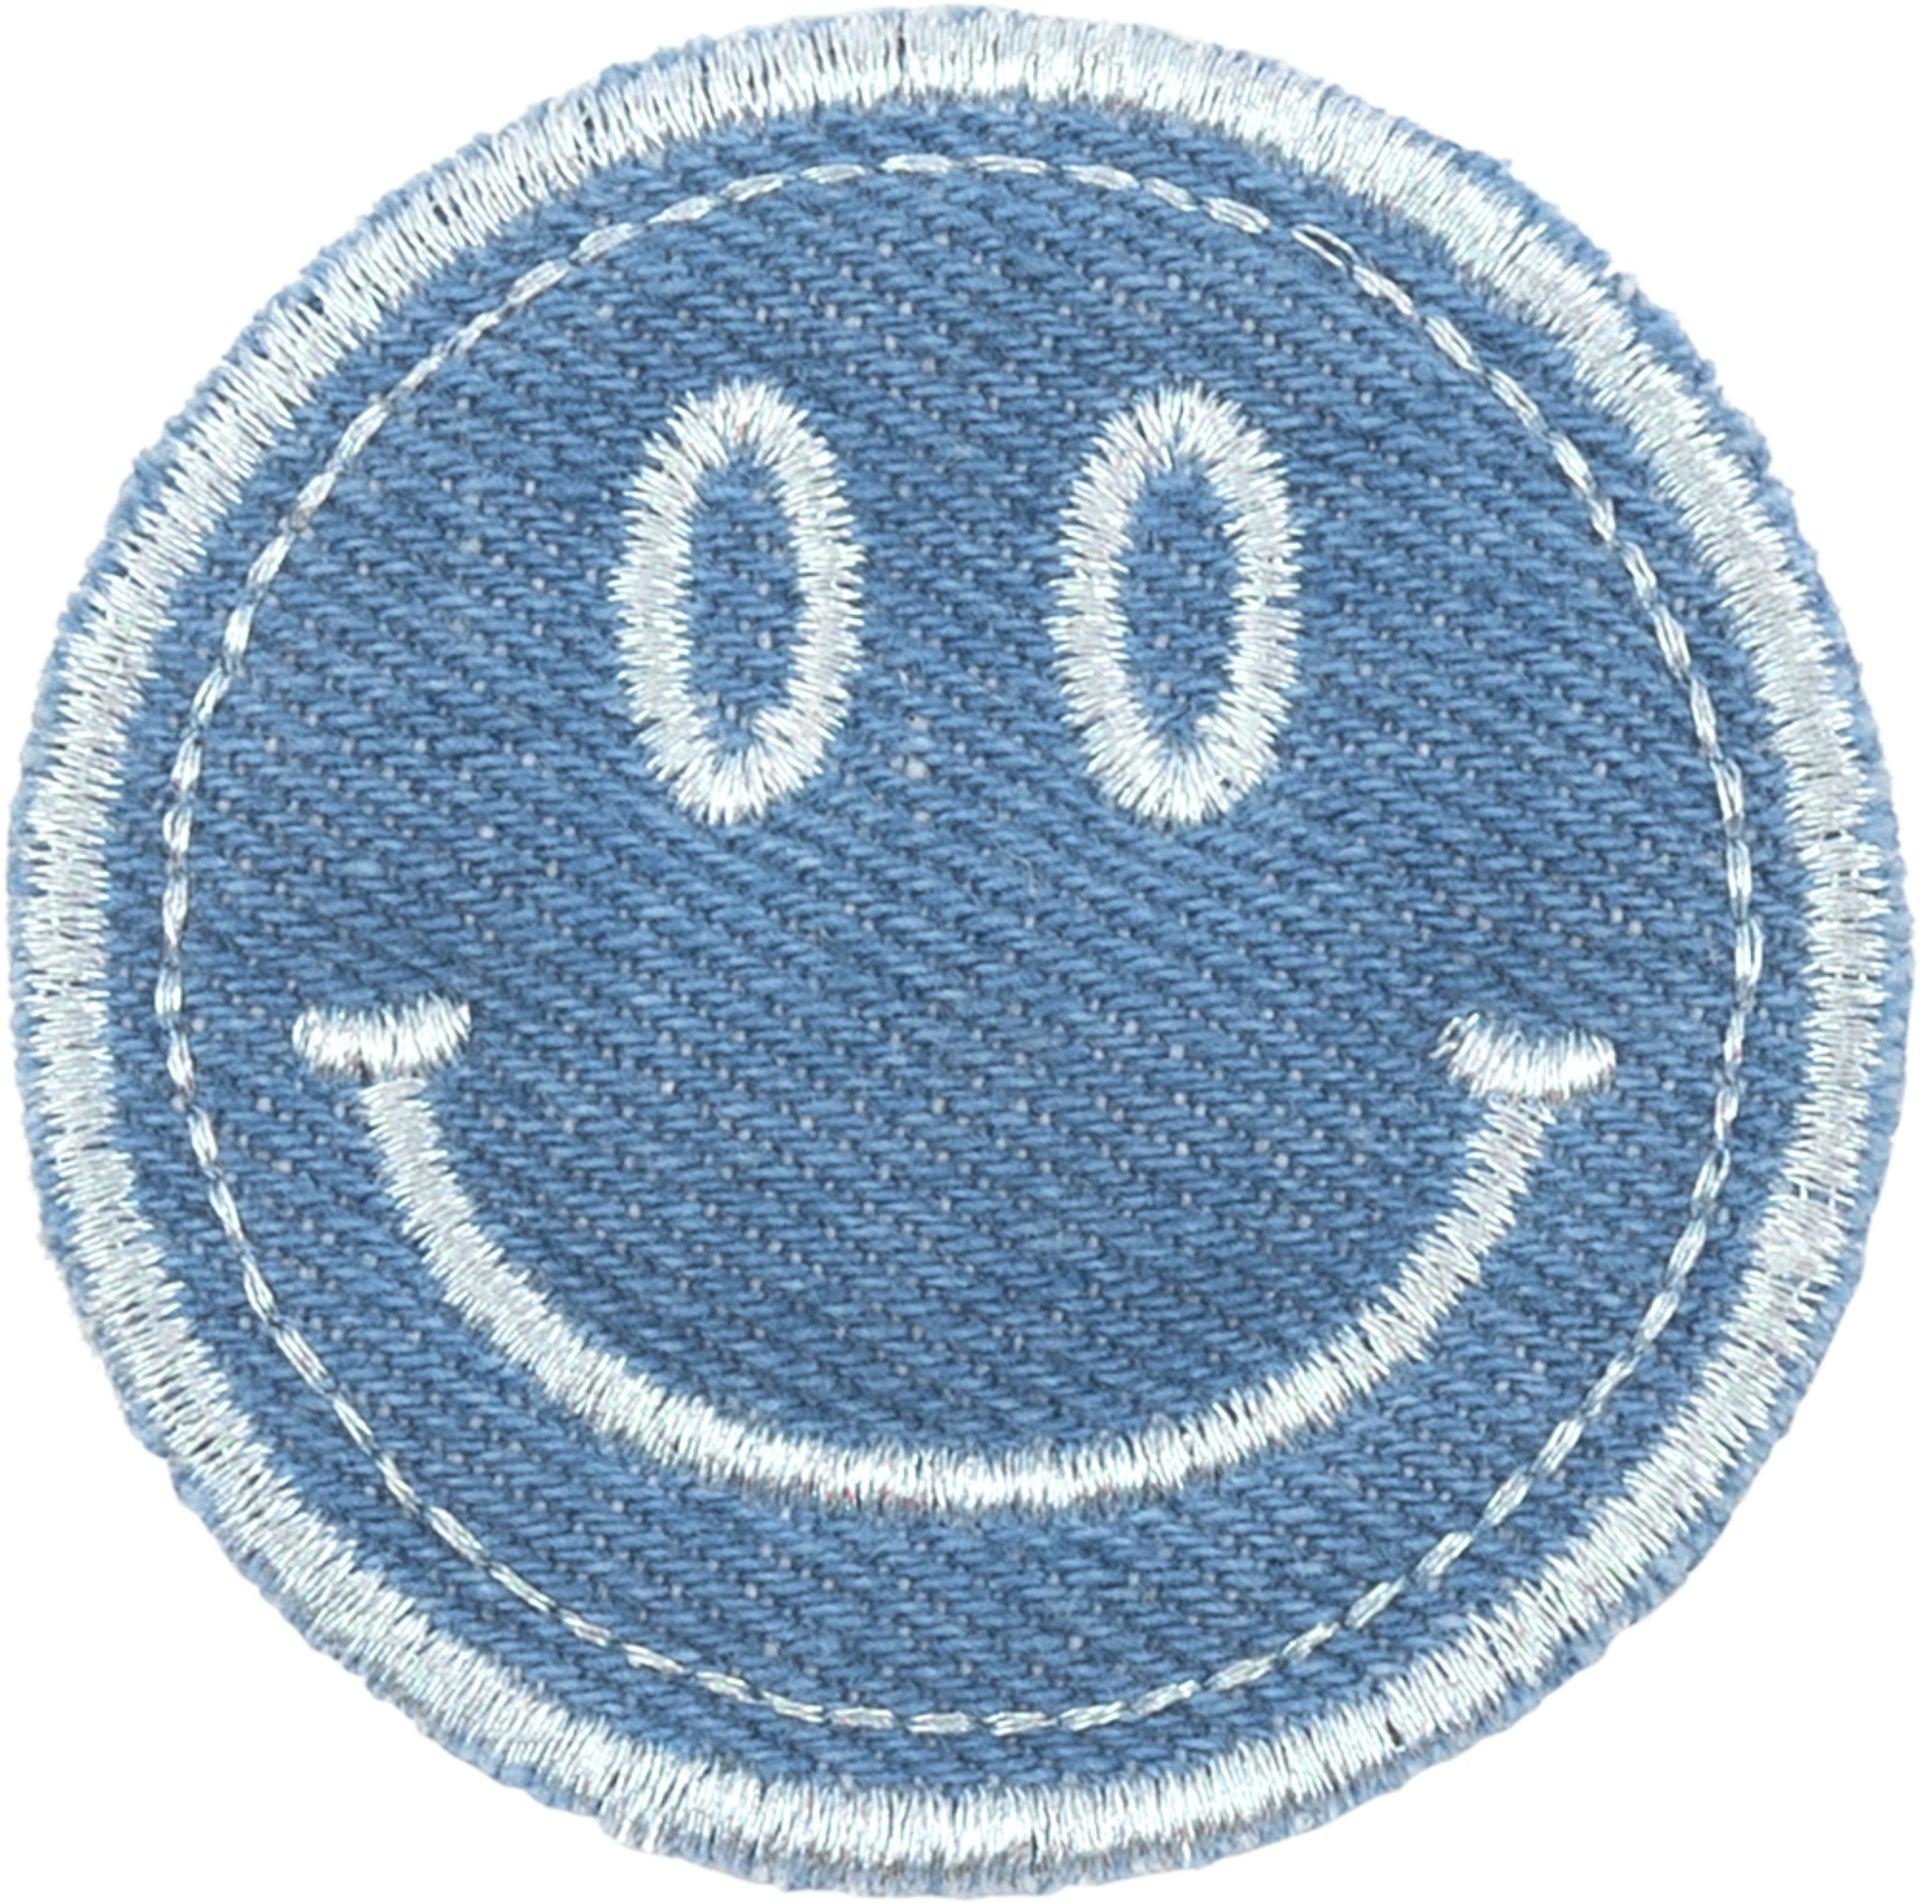 Smiley Sticker - Smiley World blue 404082b - , 1,29 €